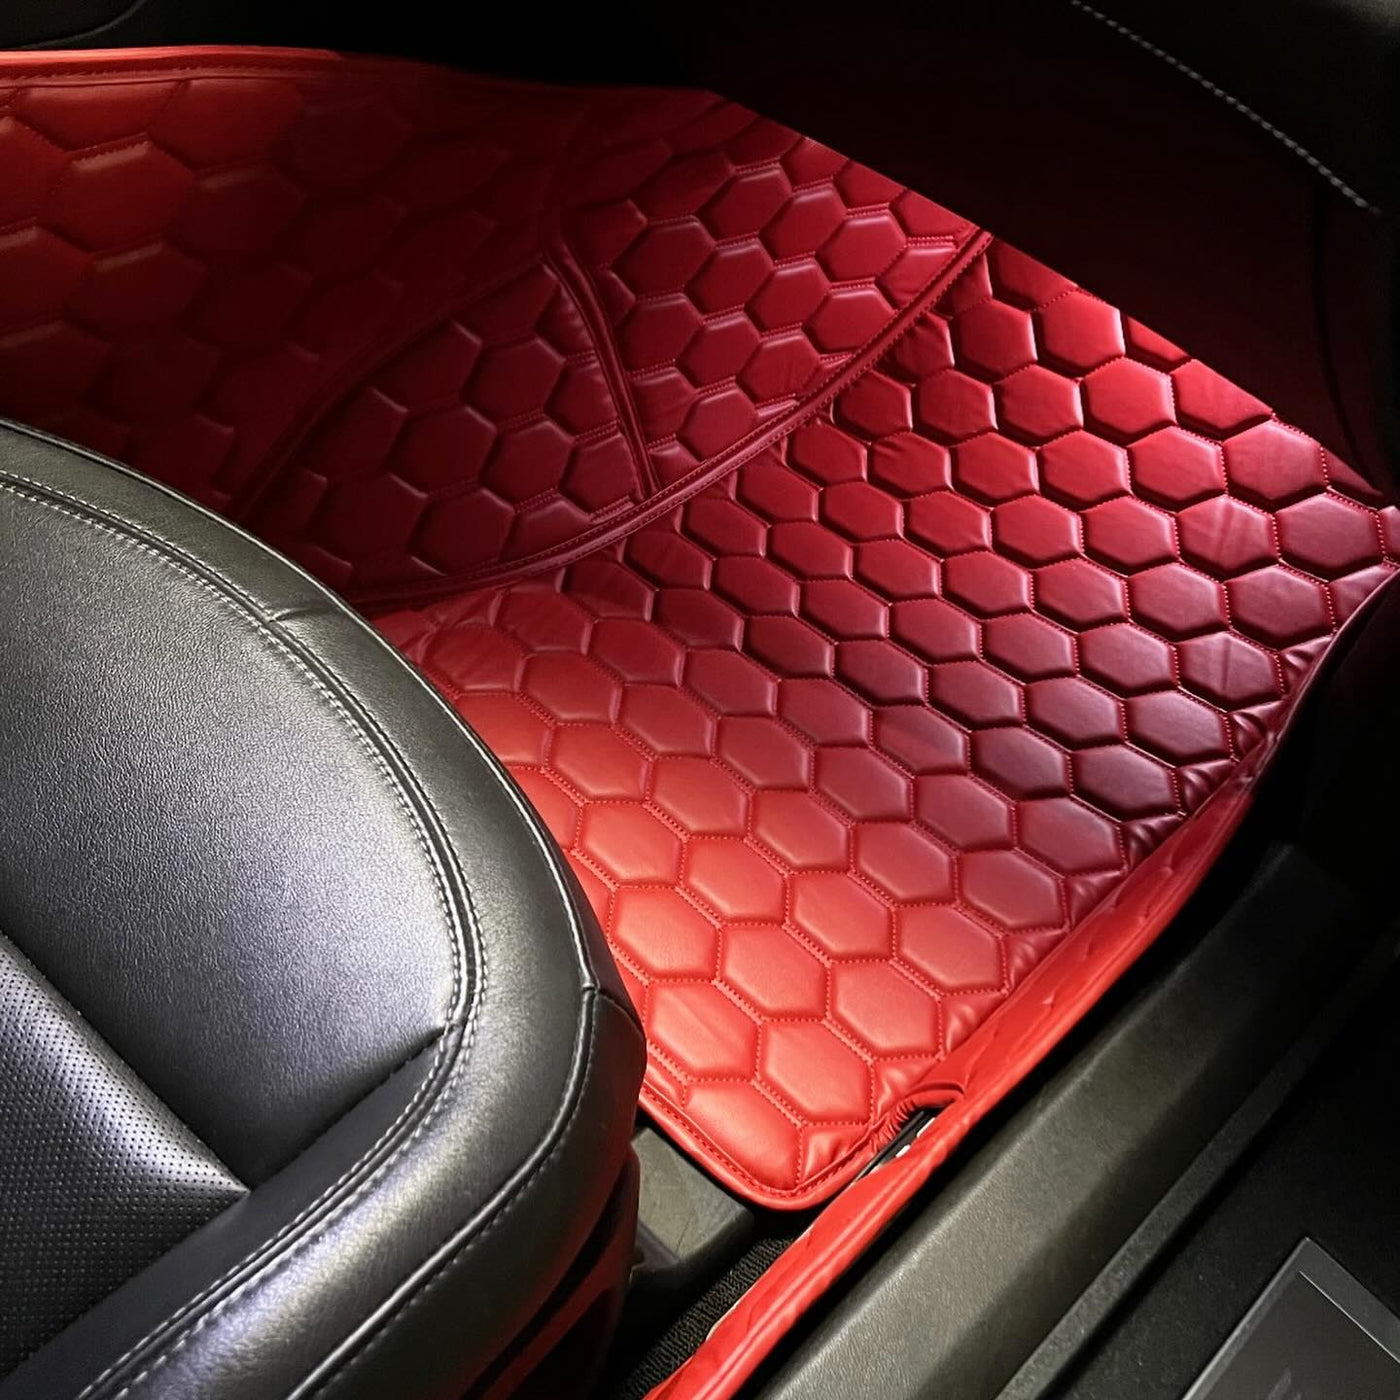 Corvette C7 Custom Premium Honeycomb Leather Floor Mat Liners